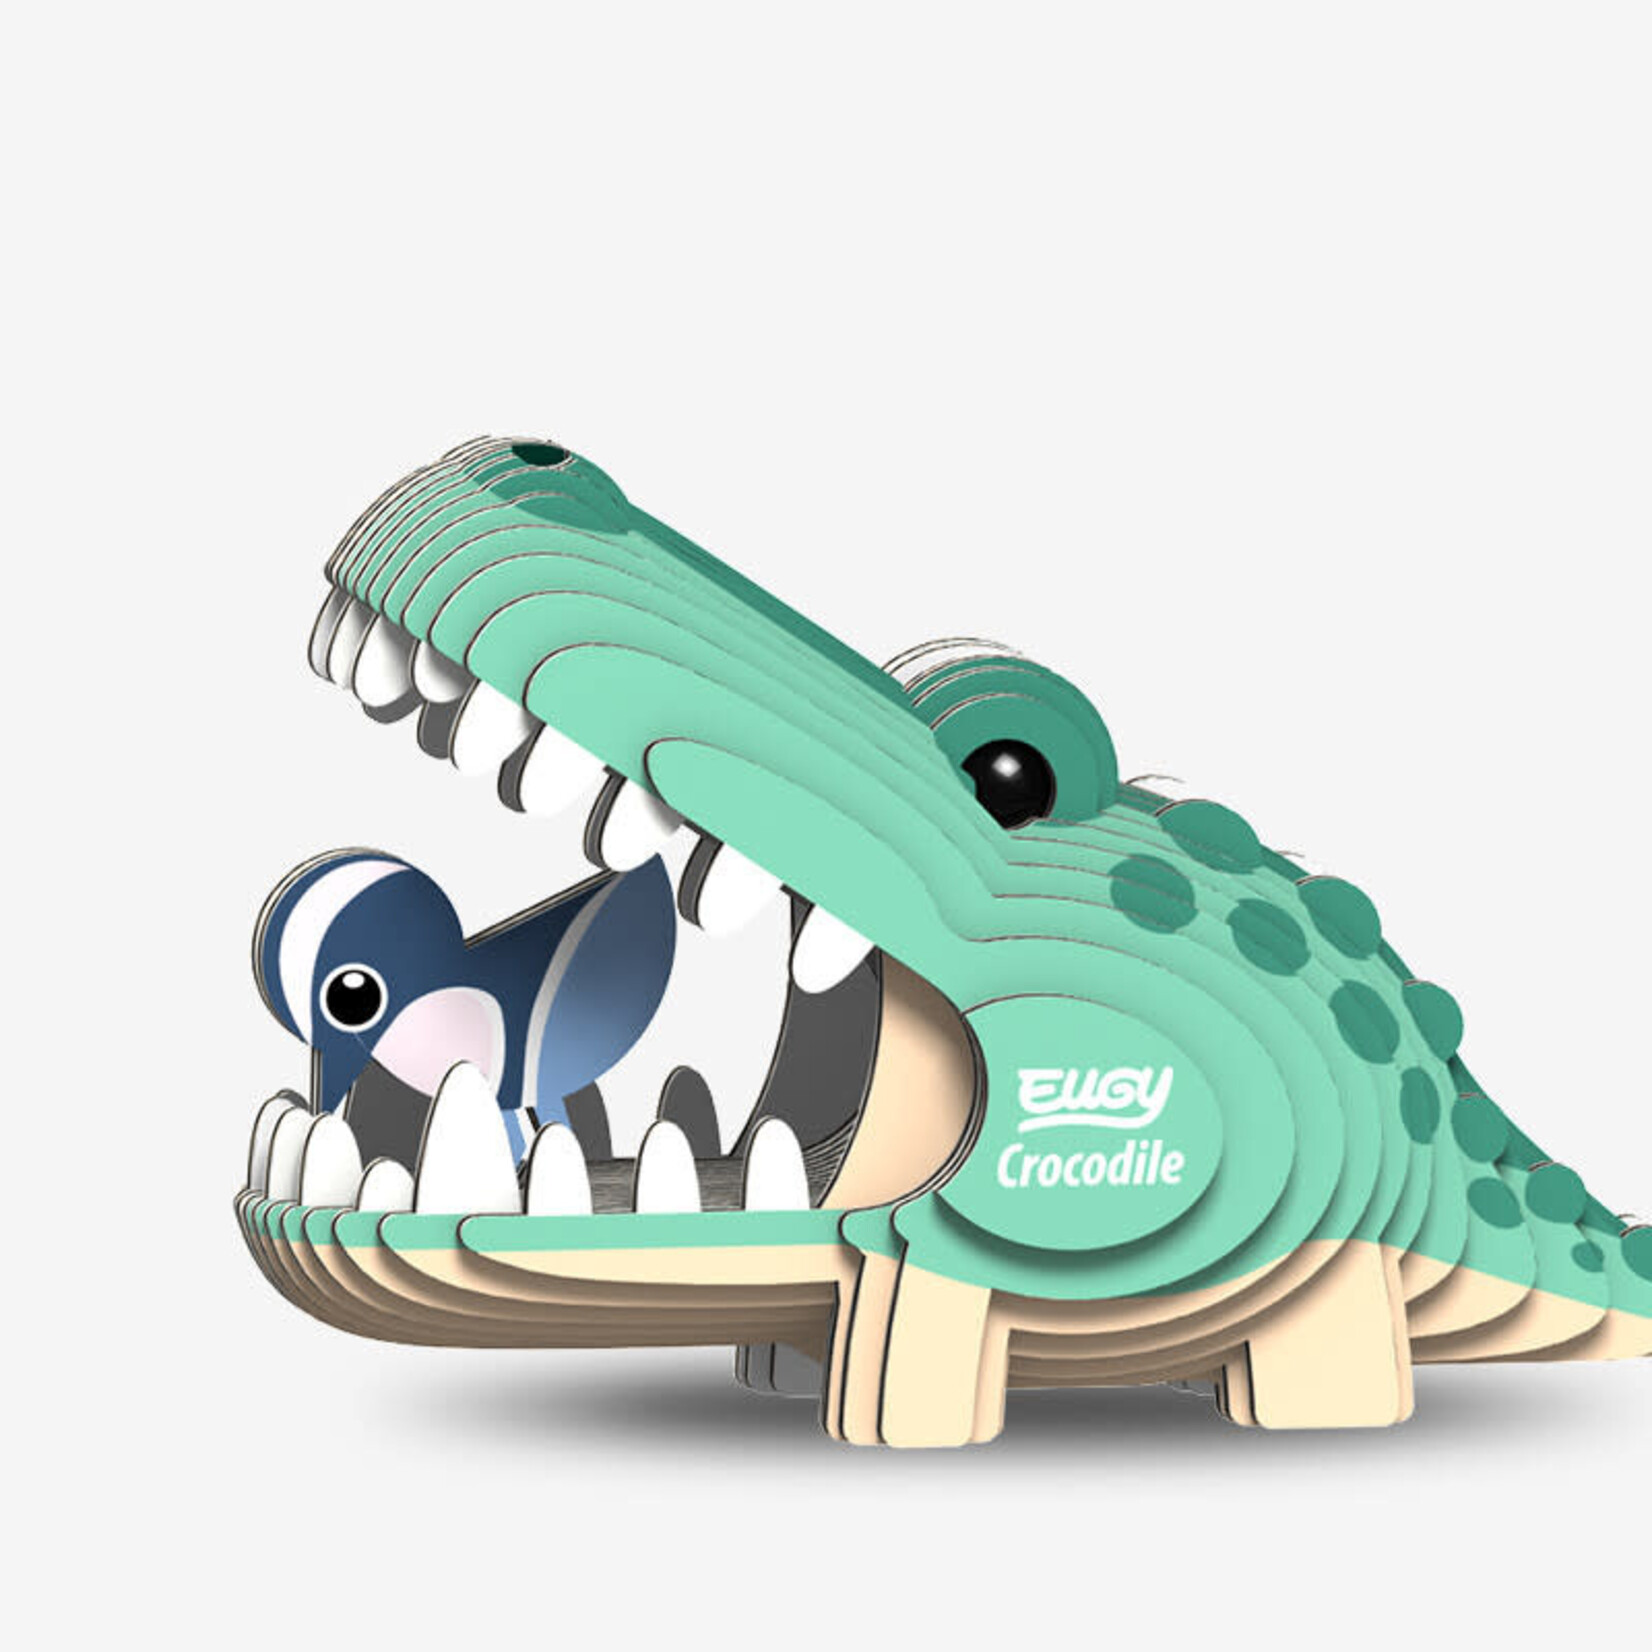 Crocodile Eugy 3d Collectable Puzzle